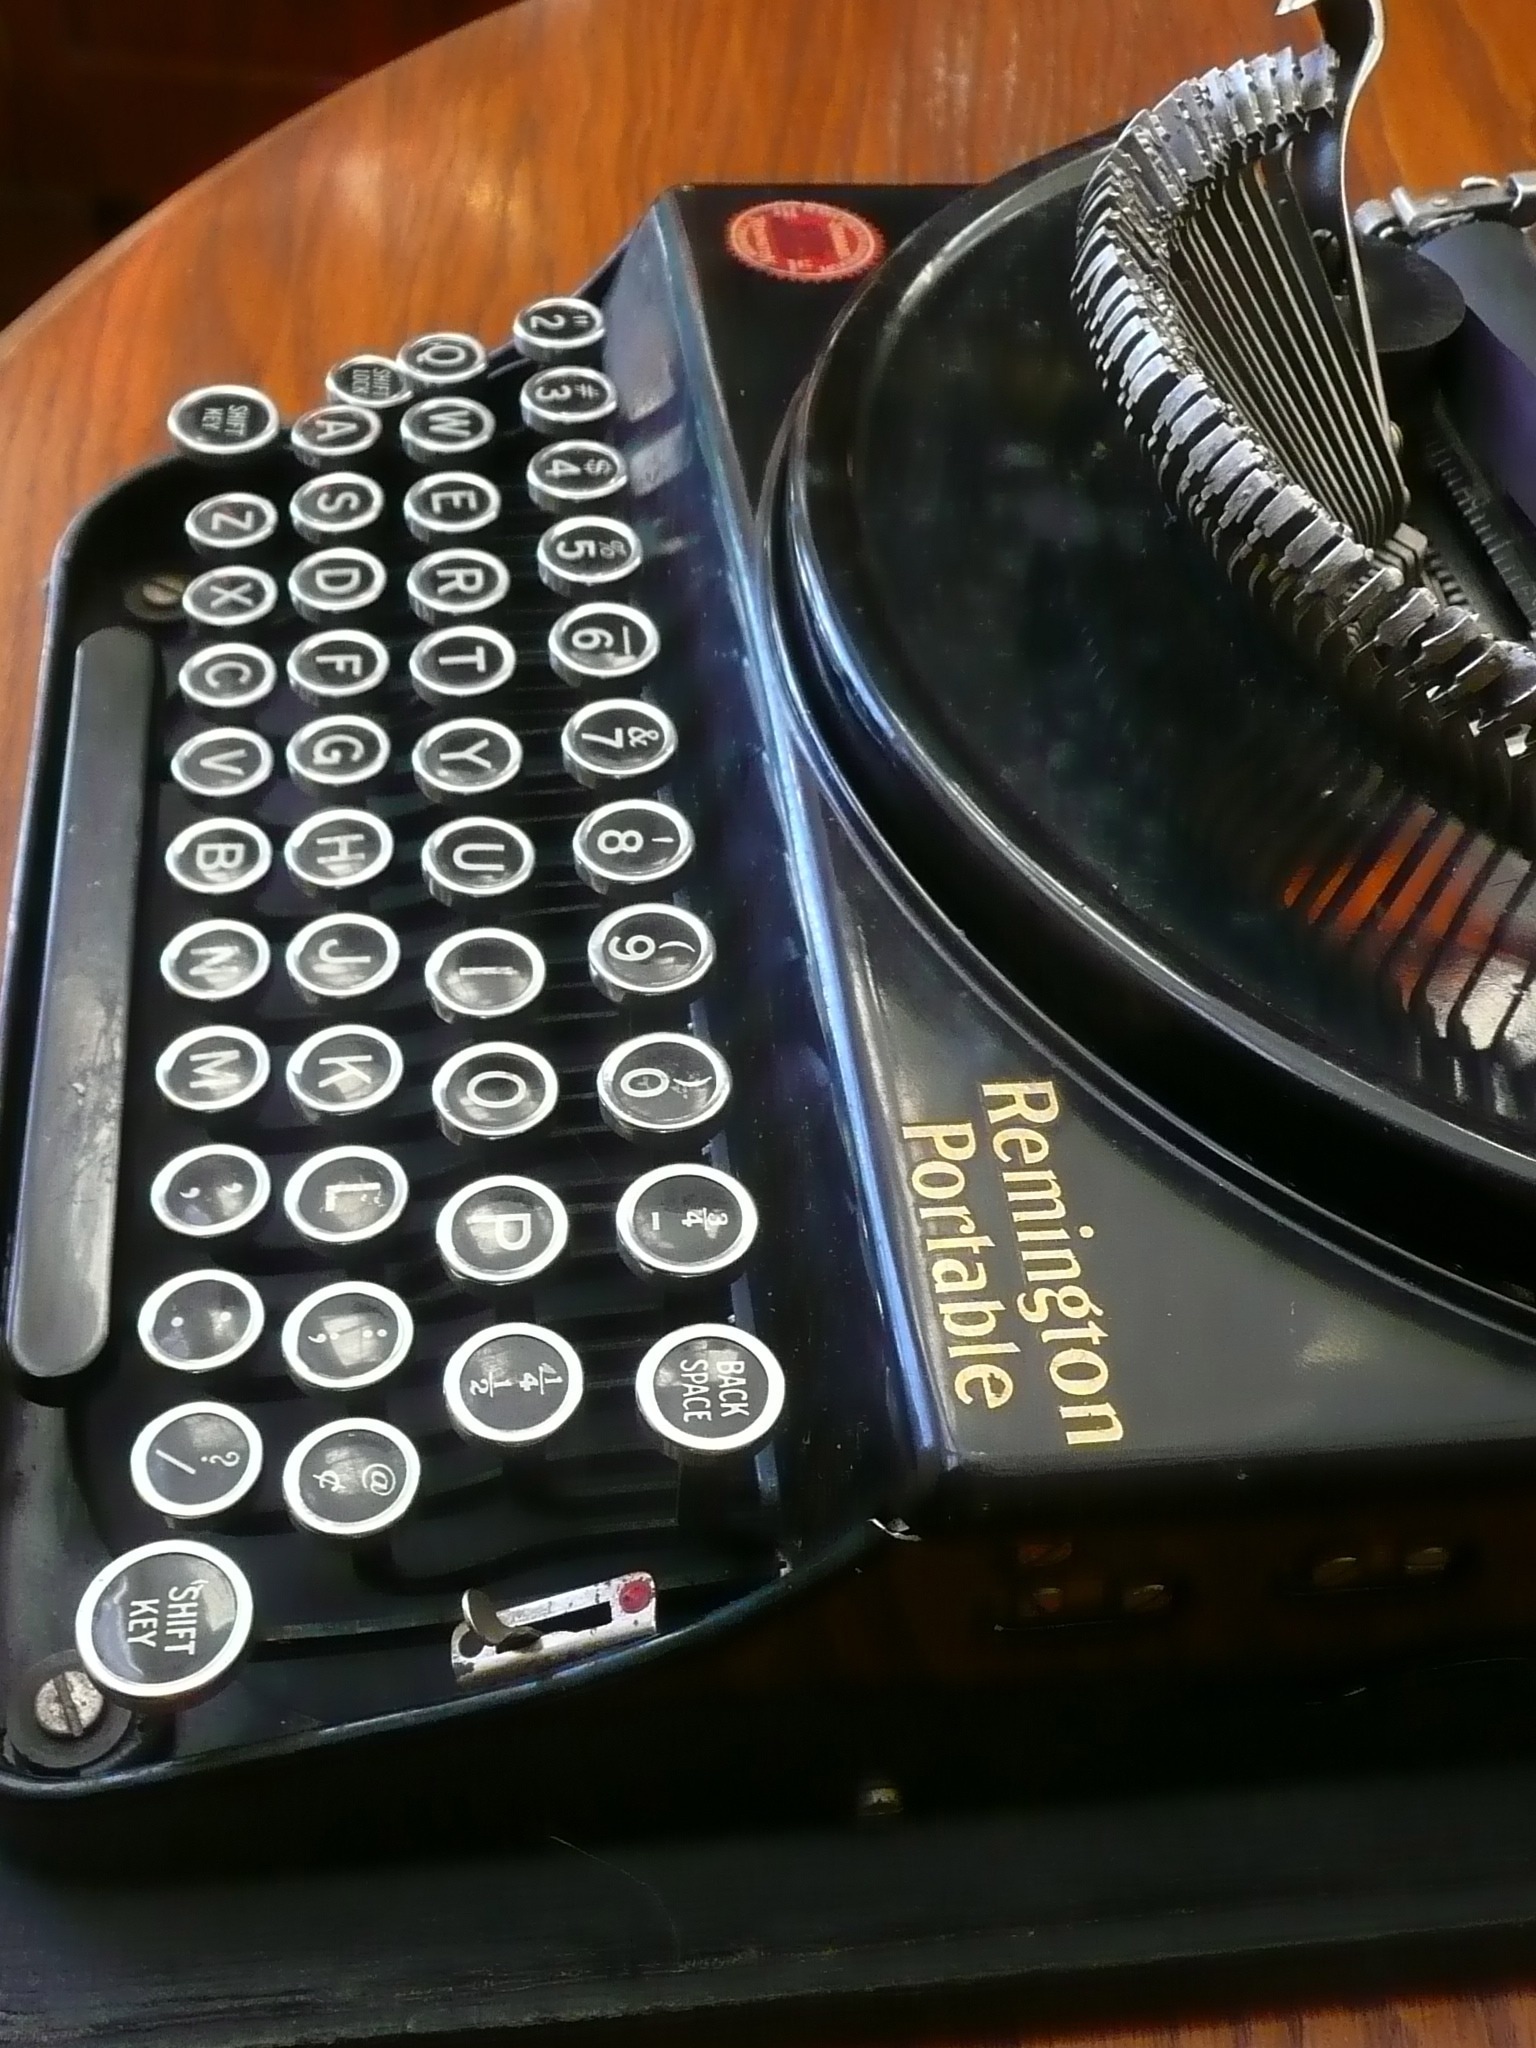 black remington portable type writer